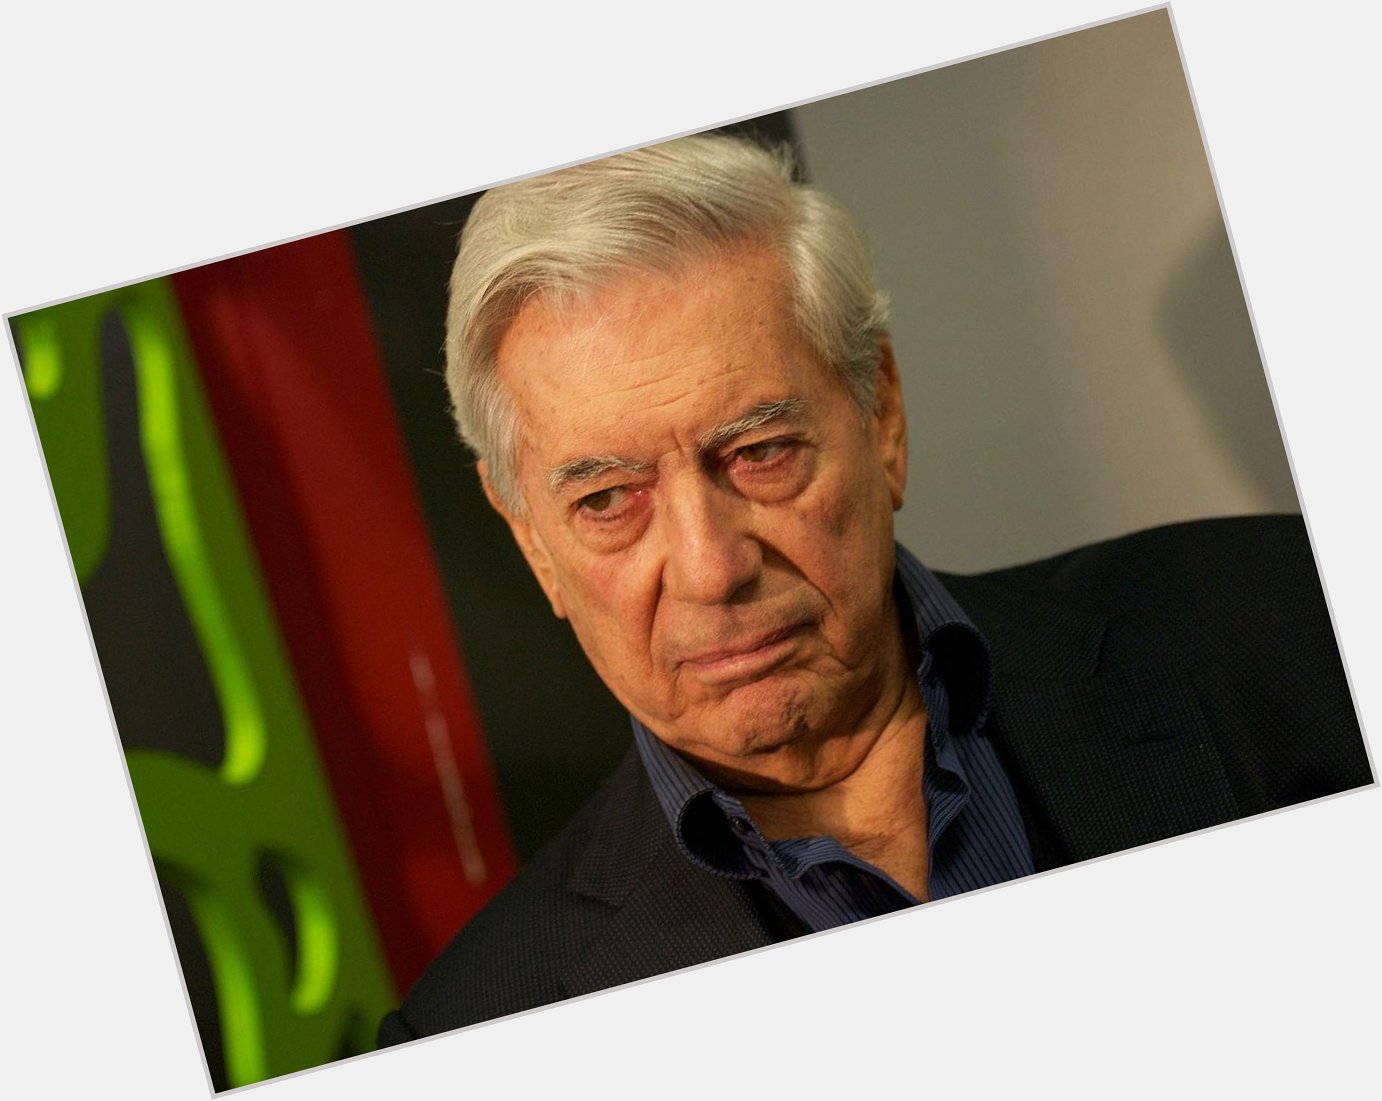 Happy 79th birthday, Mario Vargas Llosa, outstanding Peruvian writer, journalist (Nobel Prize in literature 2010). 